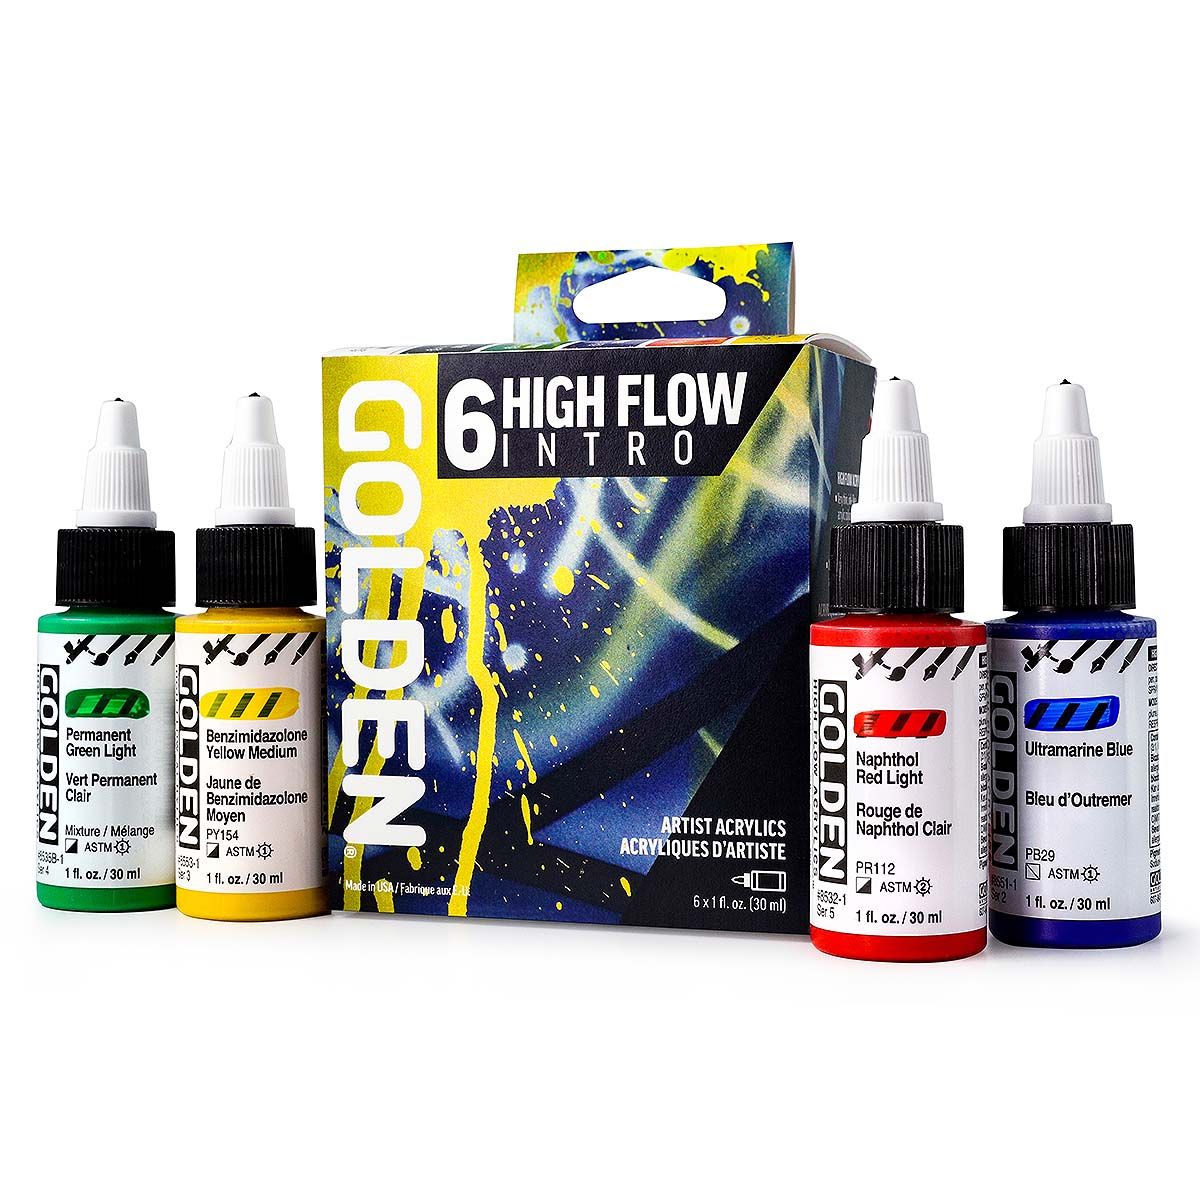 Golden High Flow Acrylic Introductory Set of 6, 1oz (30ml) Bottles